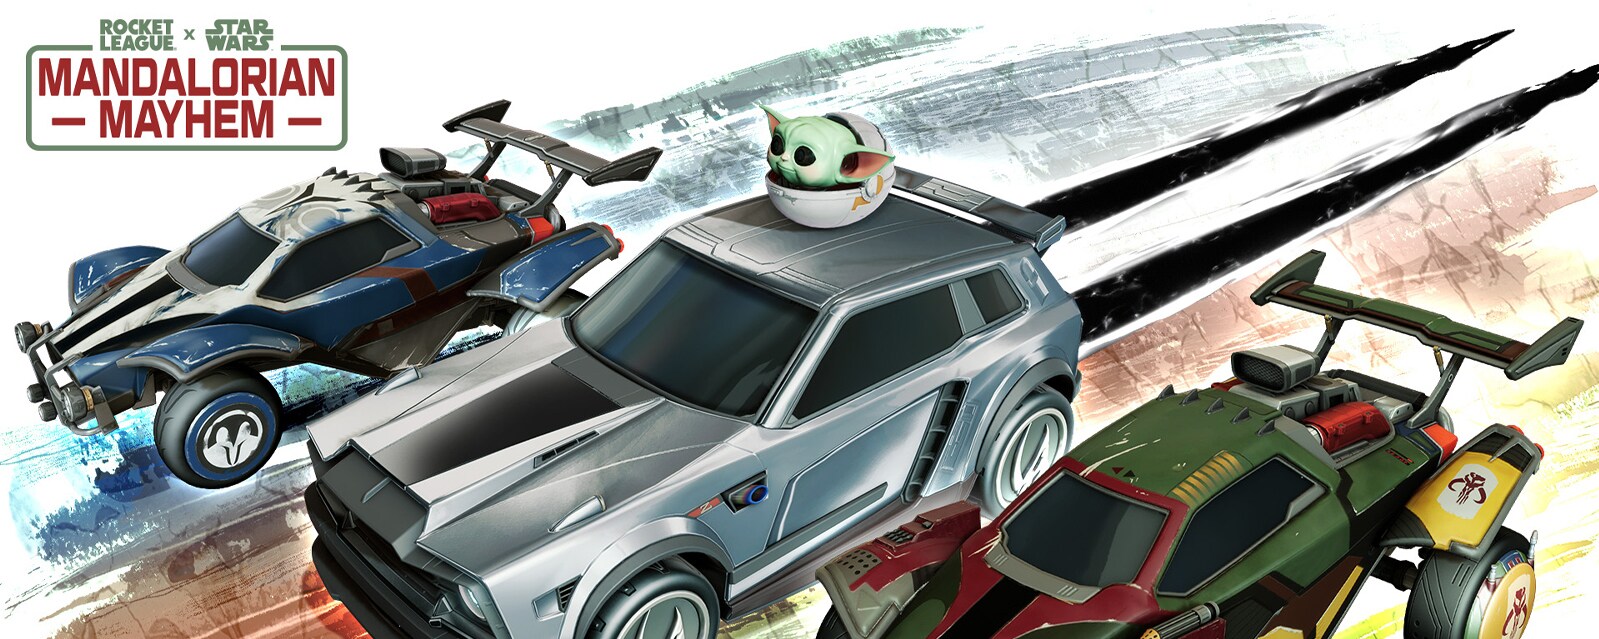 Rocket League's Mandalorian Mayhem key art featuring three Star Wars-themed cars